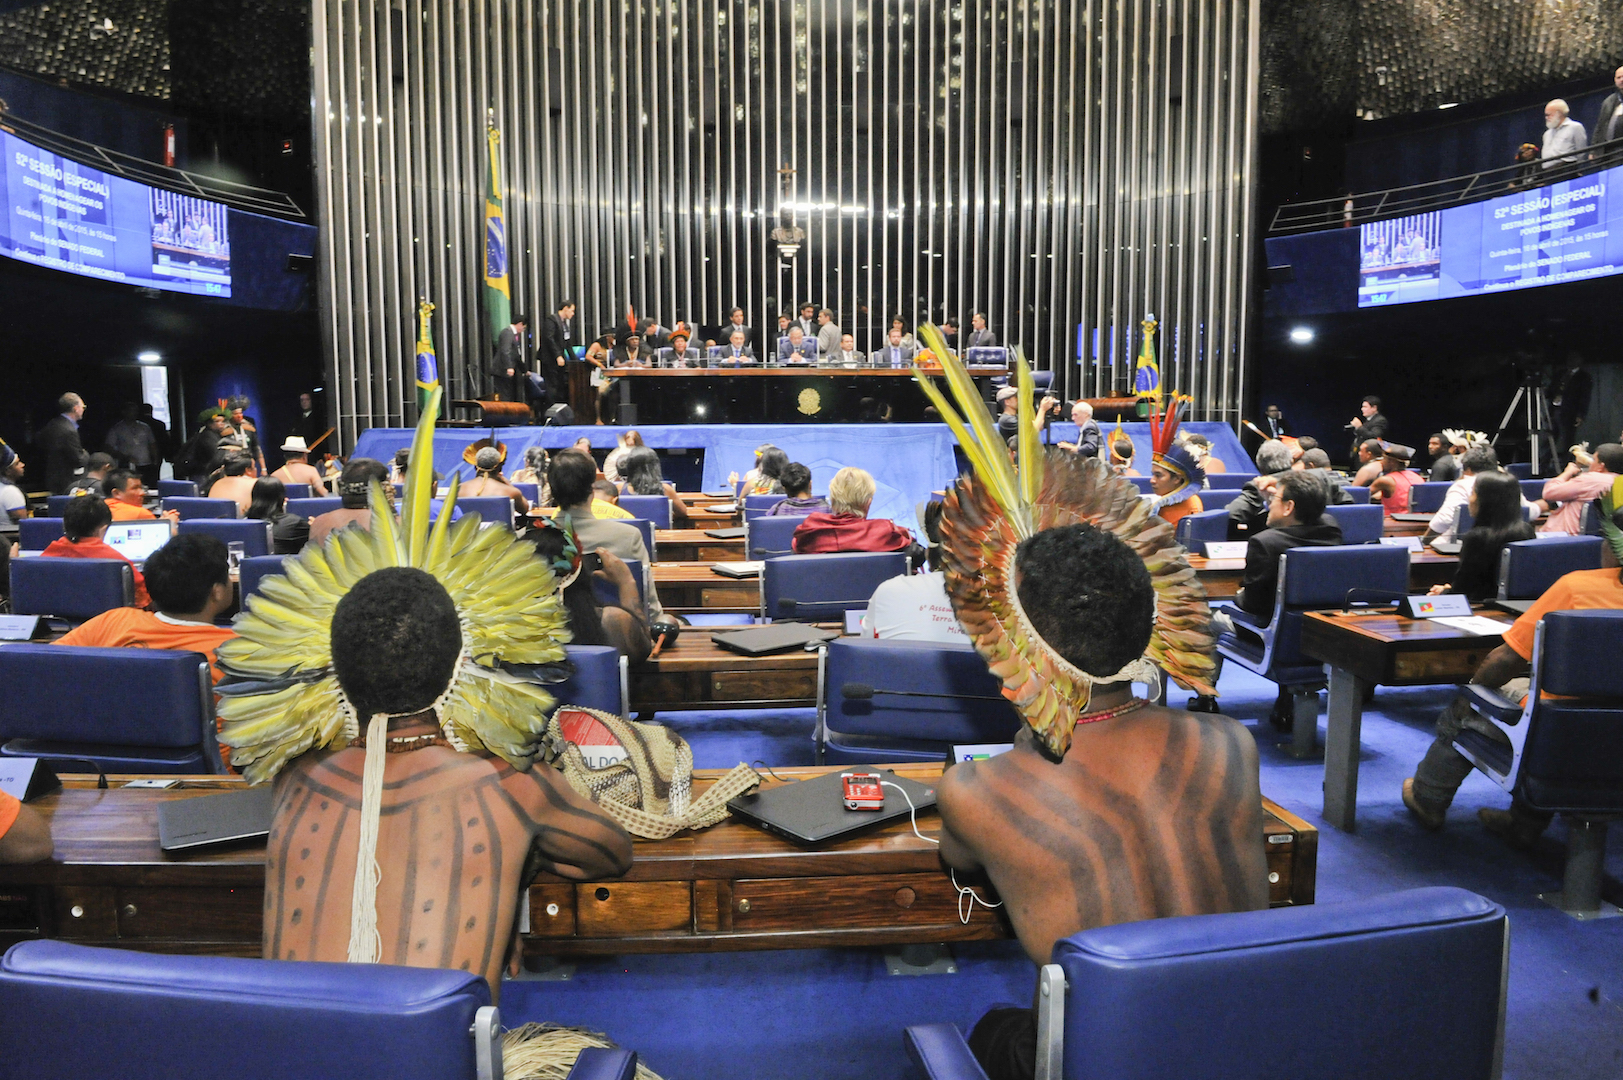 Brazil,Indigenous attending session at Brazil's Senate